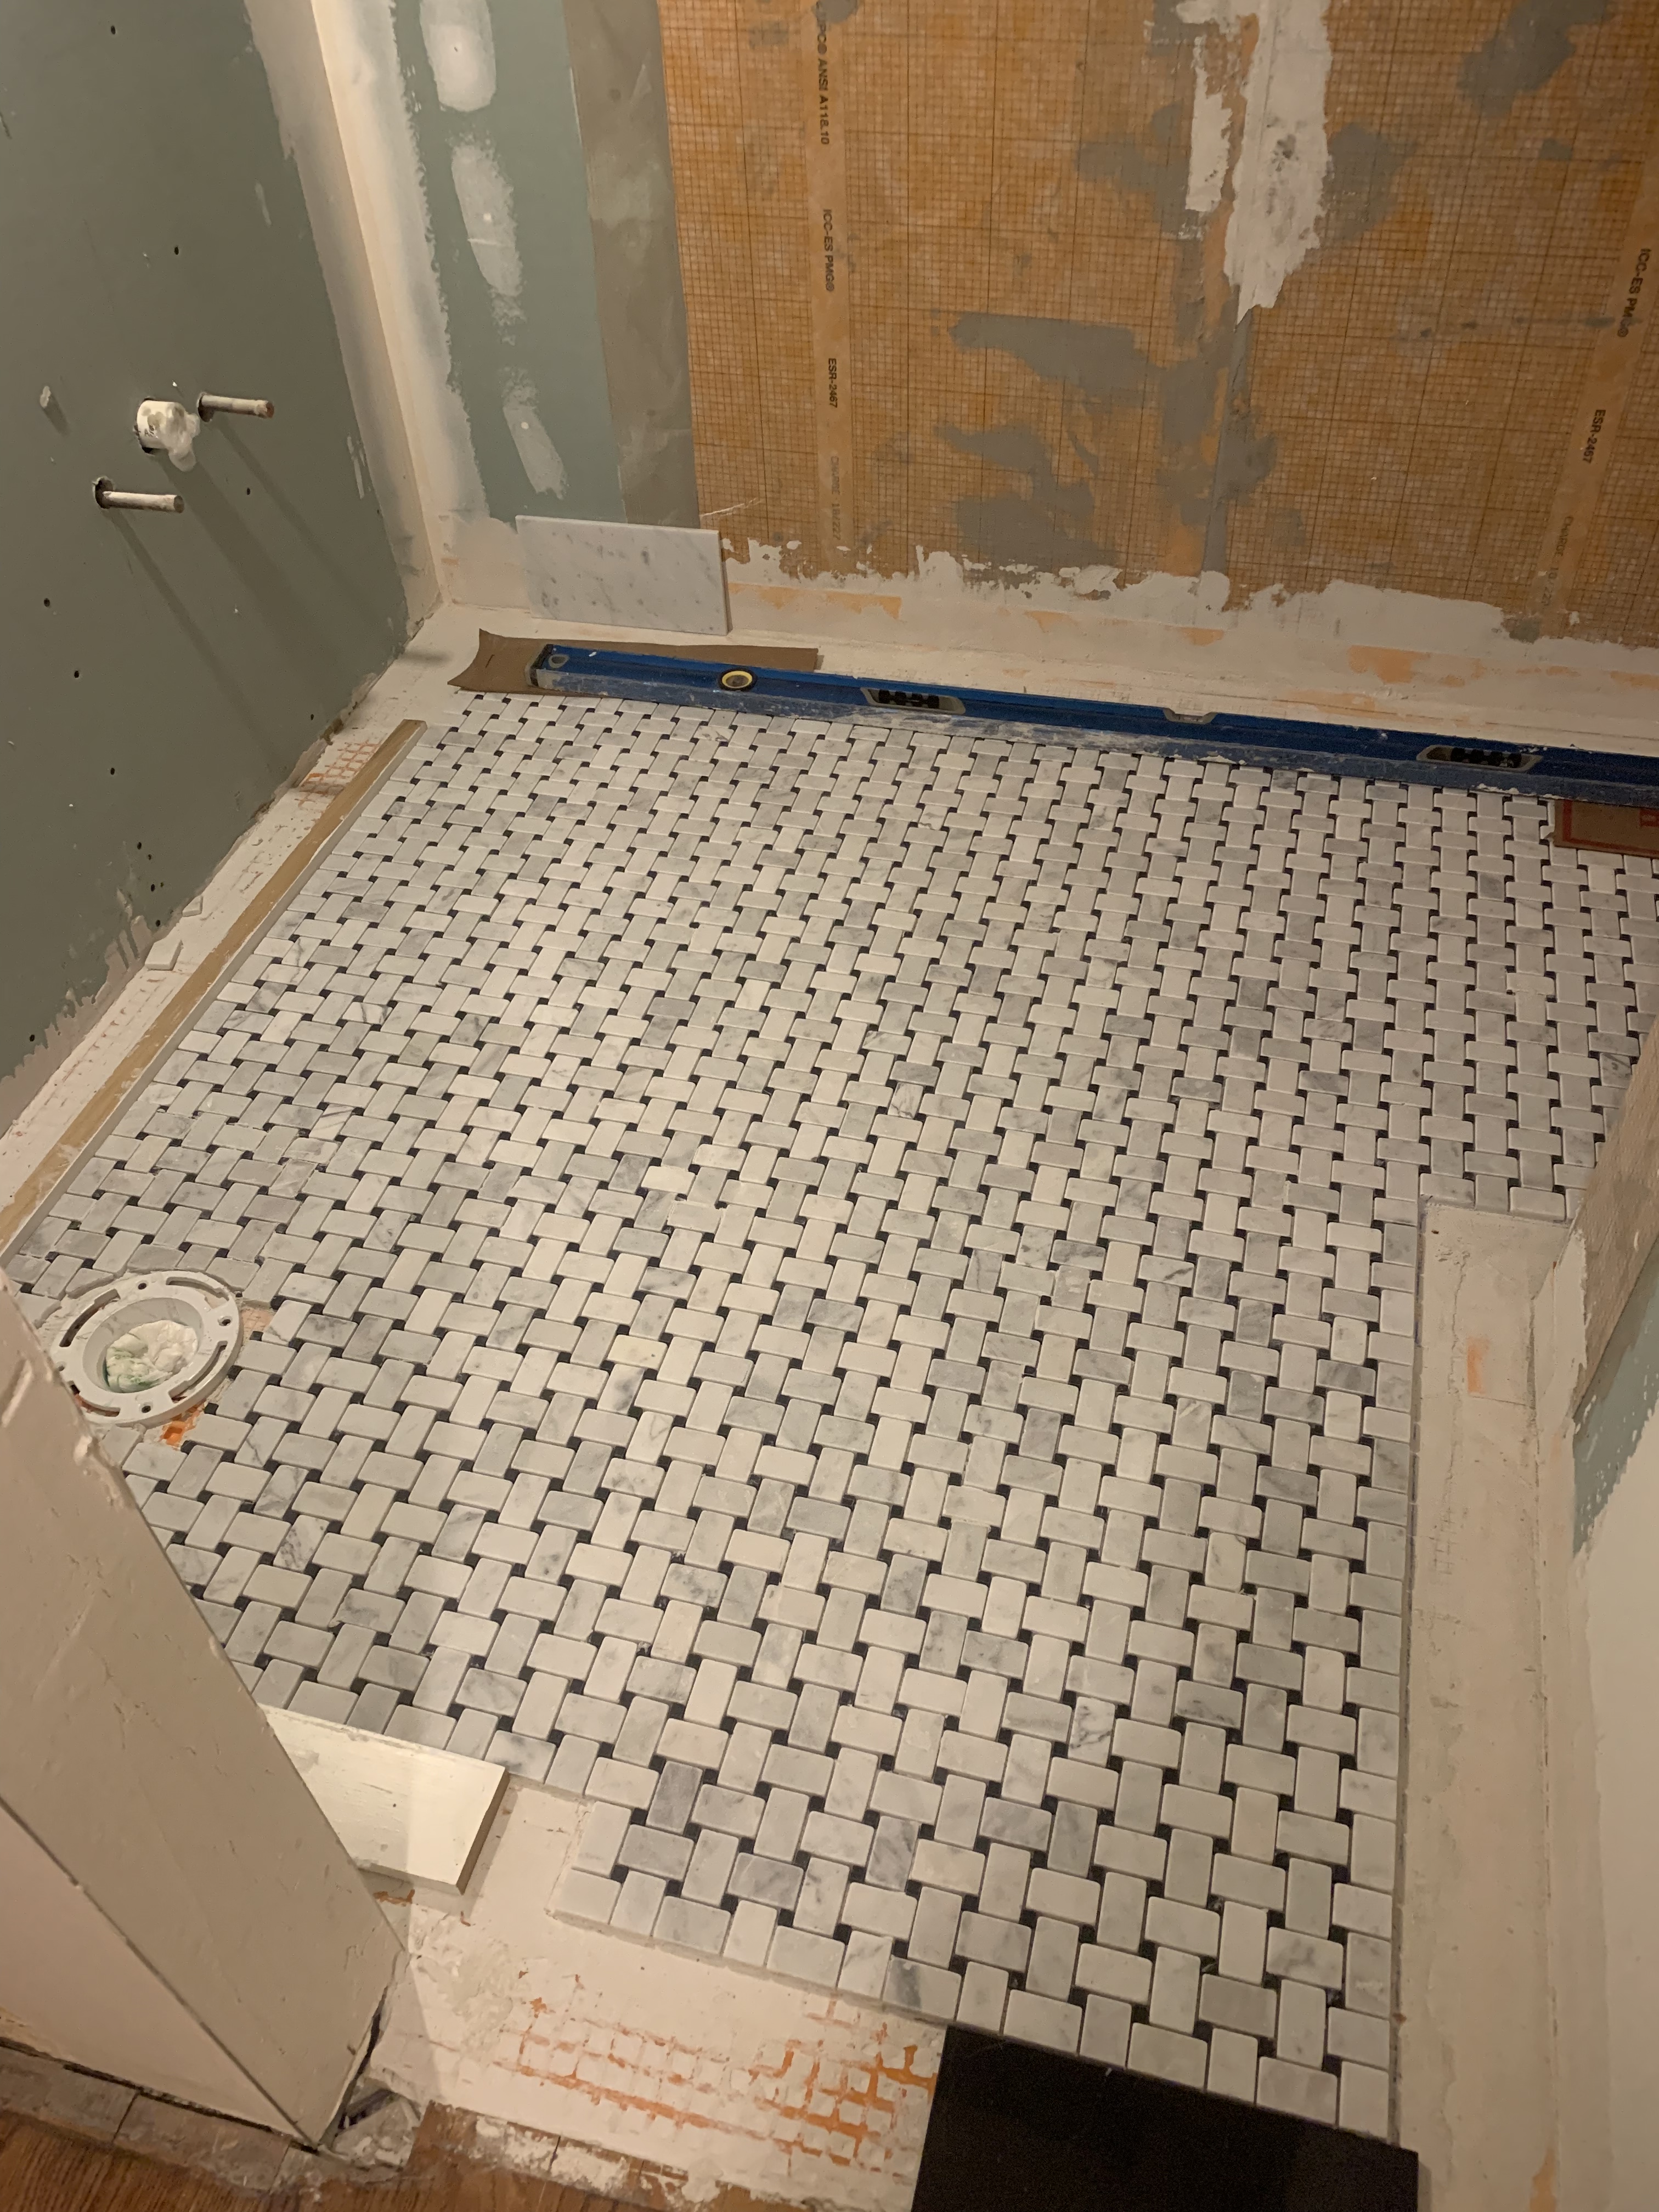 Field tile bathroom floor _3-29-19